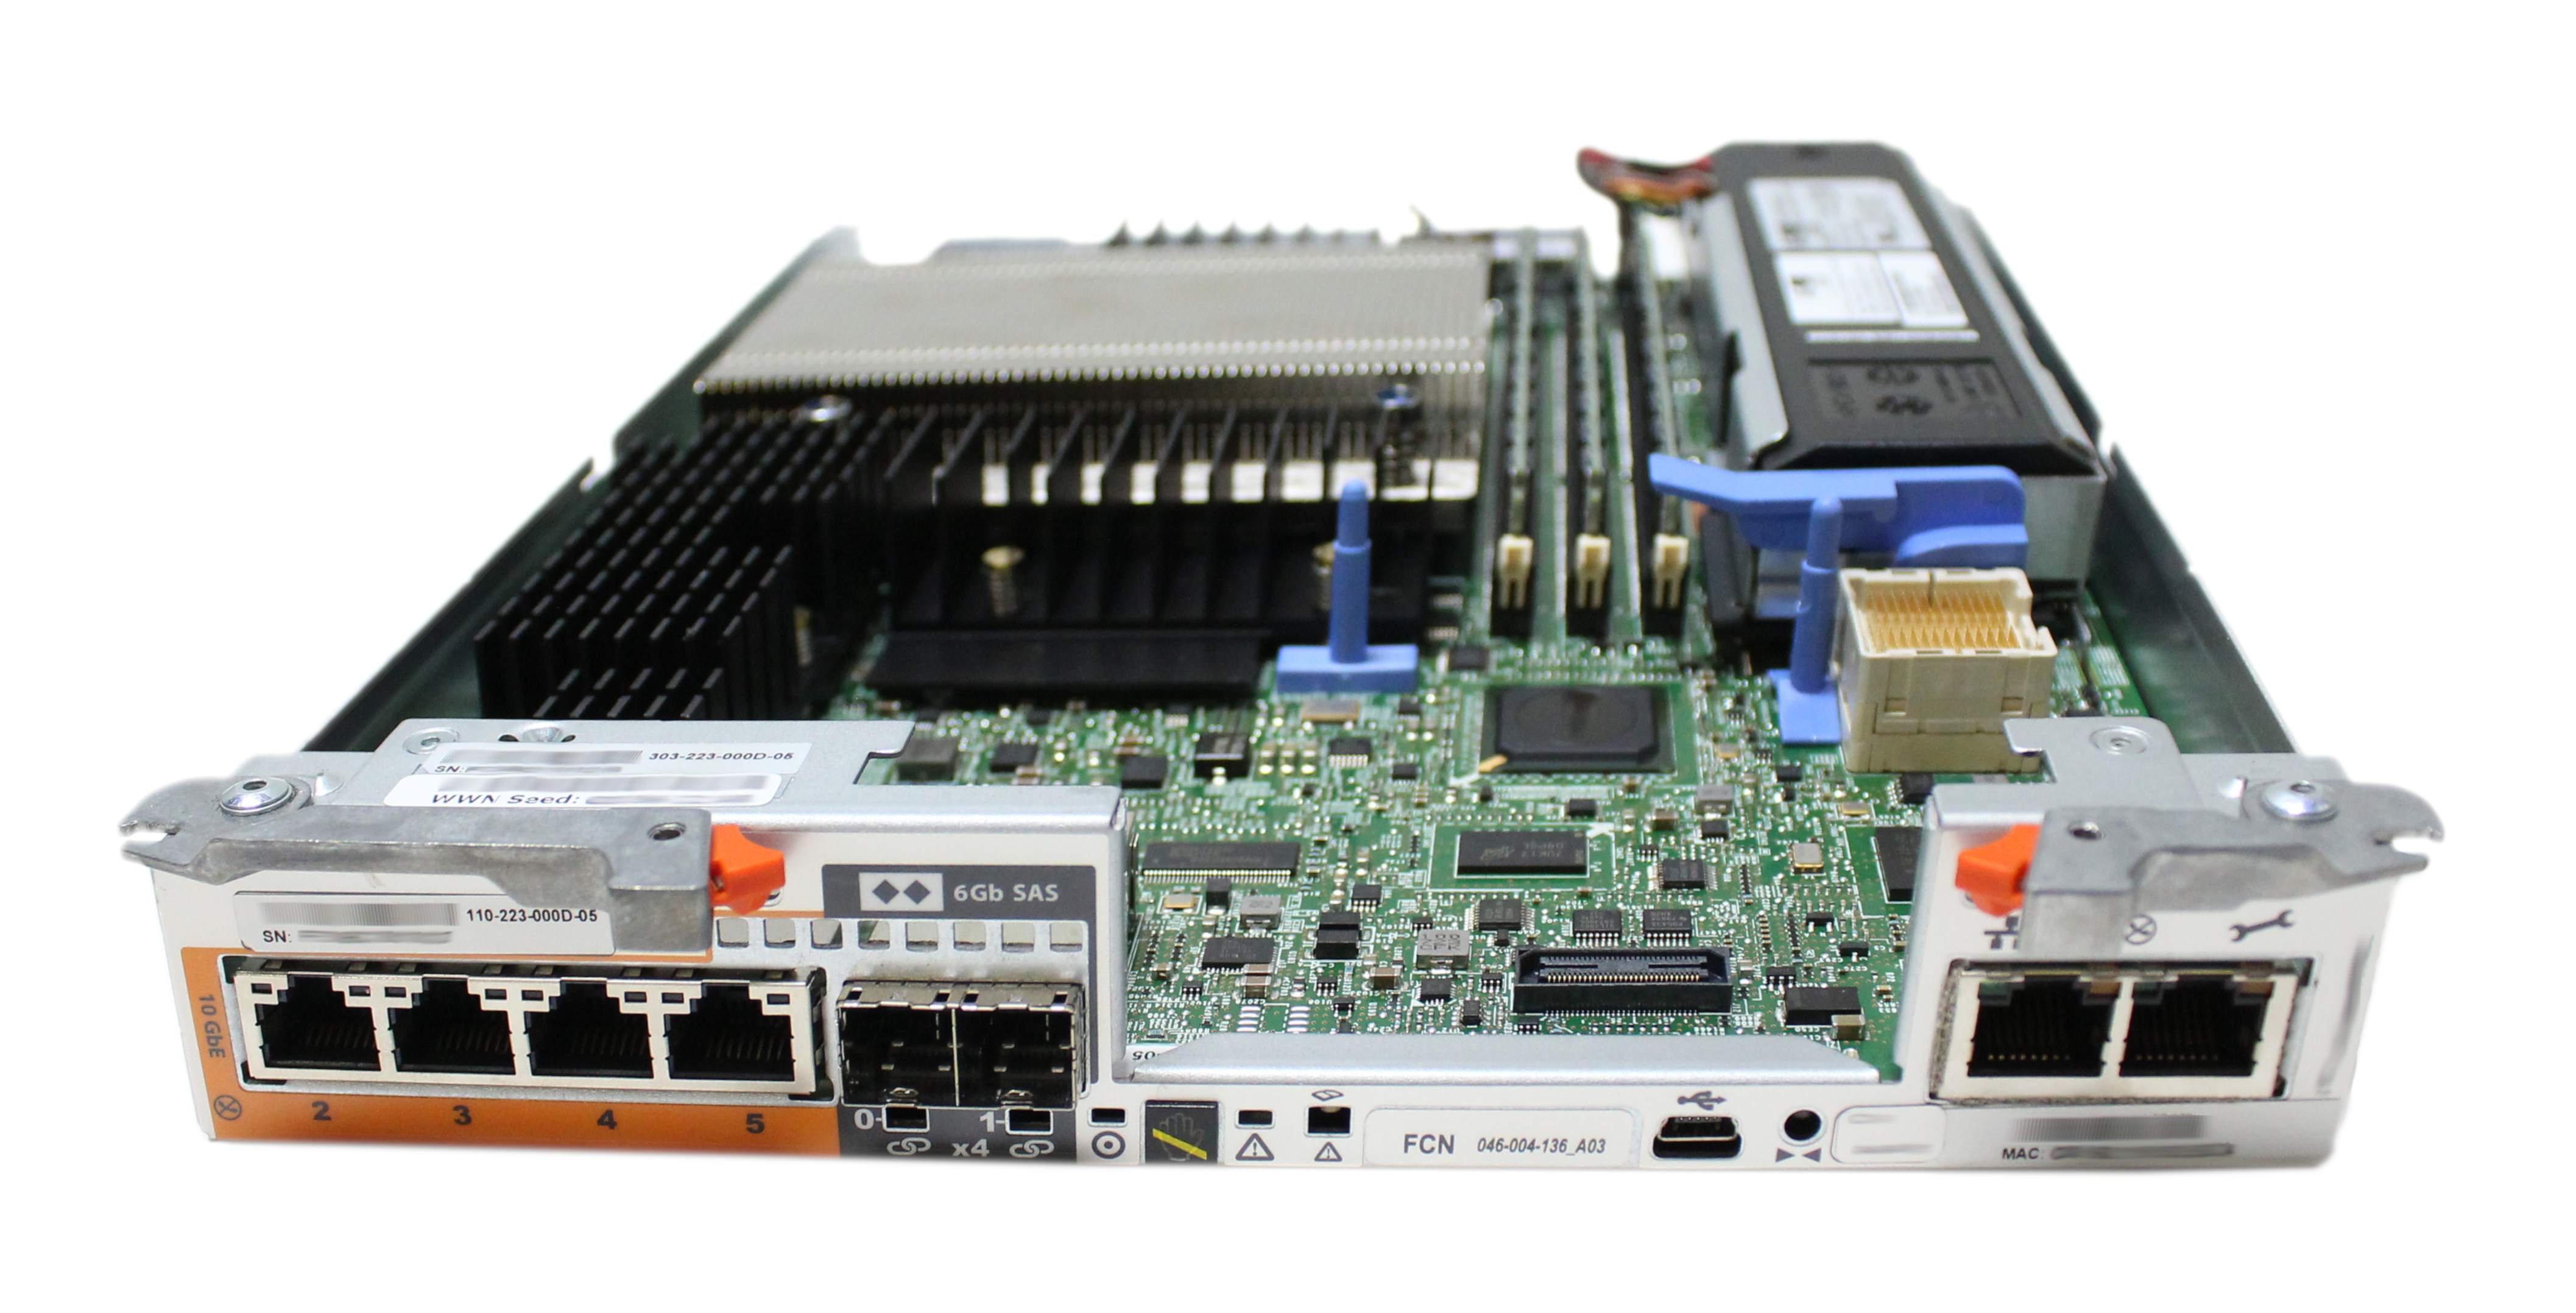 EMC Storage Module Controller Processor FCN 046-004-136_A03 110-223-000D-05 303-223-000D-05 - Click Image to Close